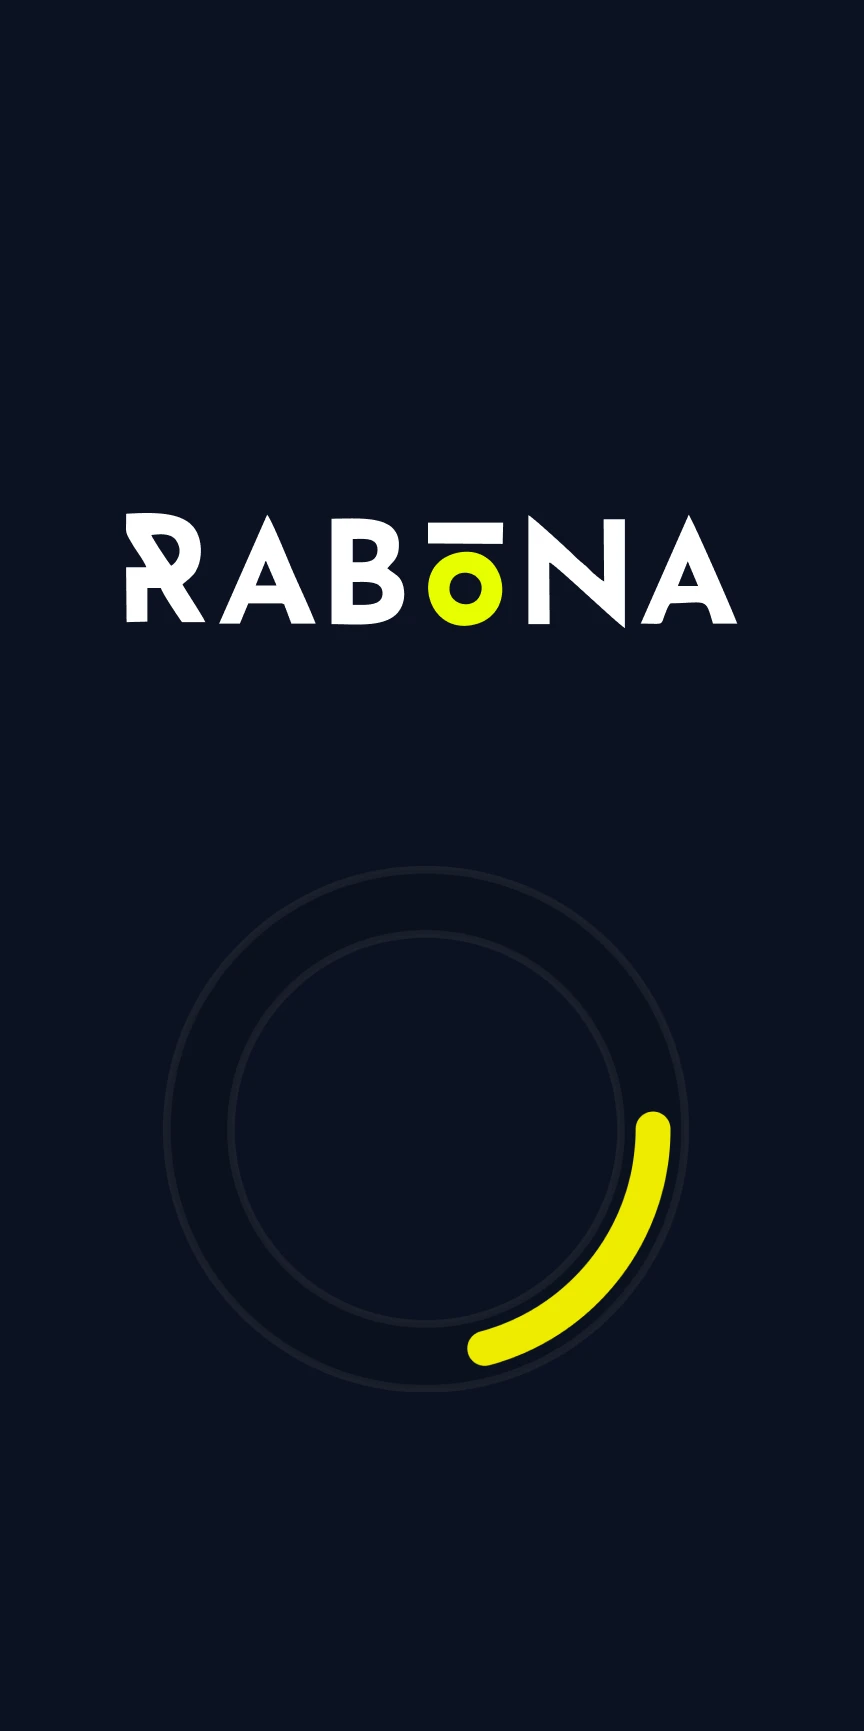 Install Rabona apps for iOS.